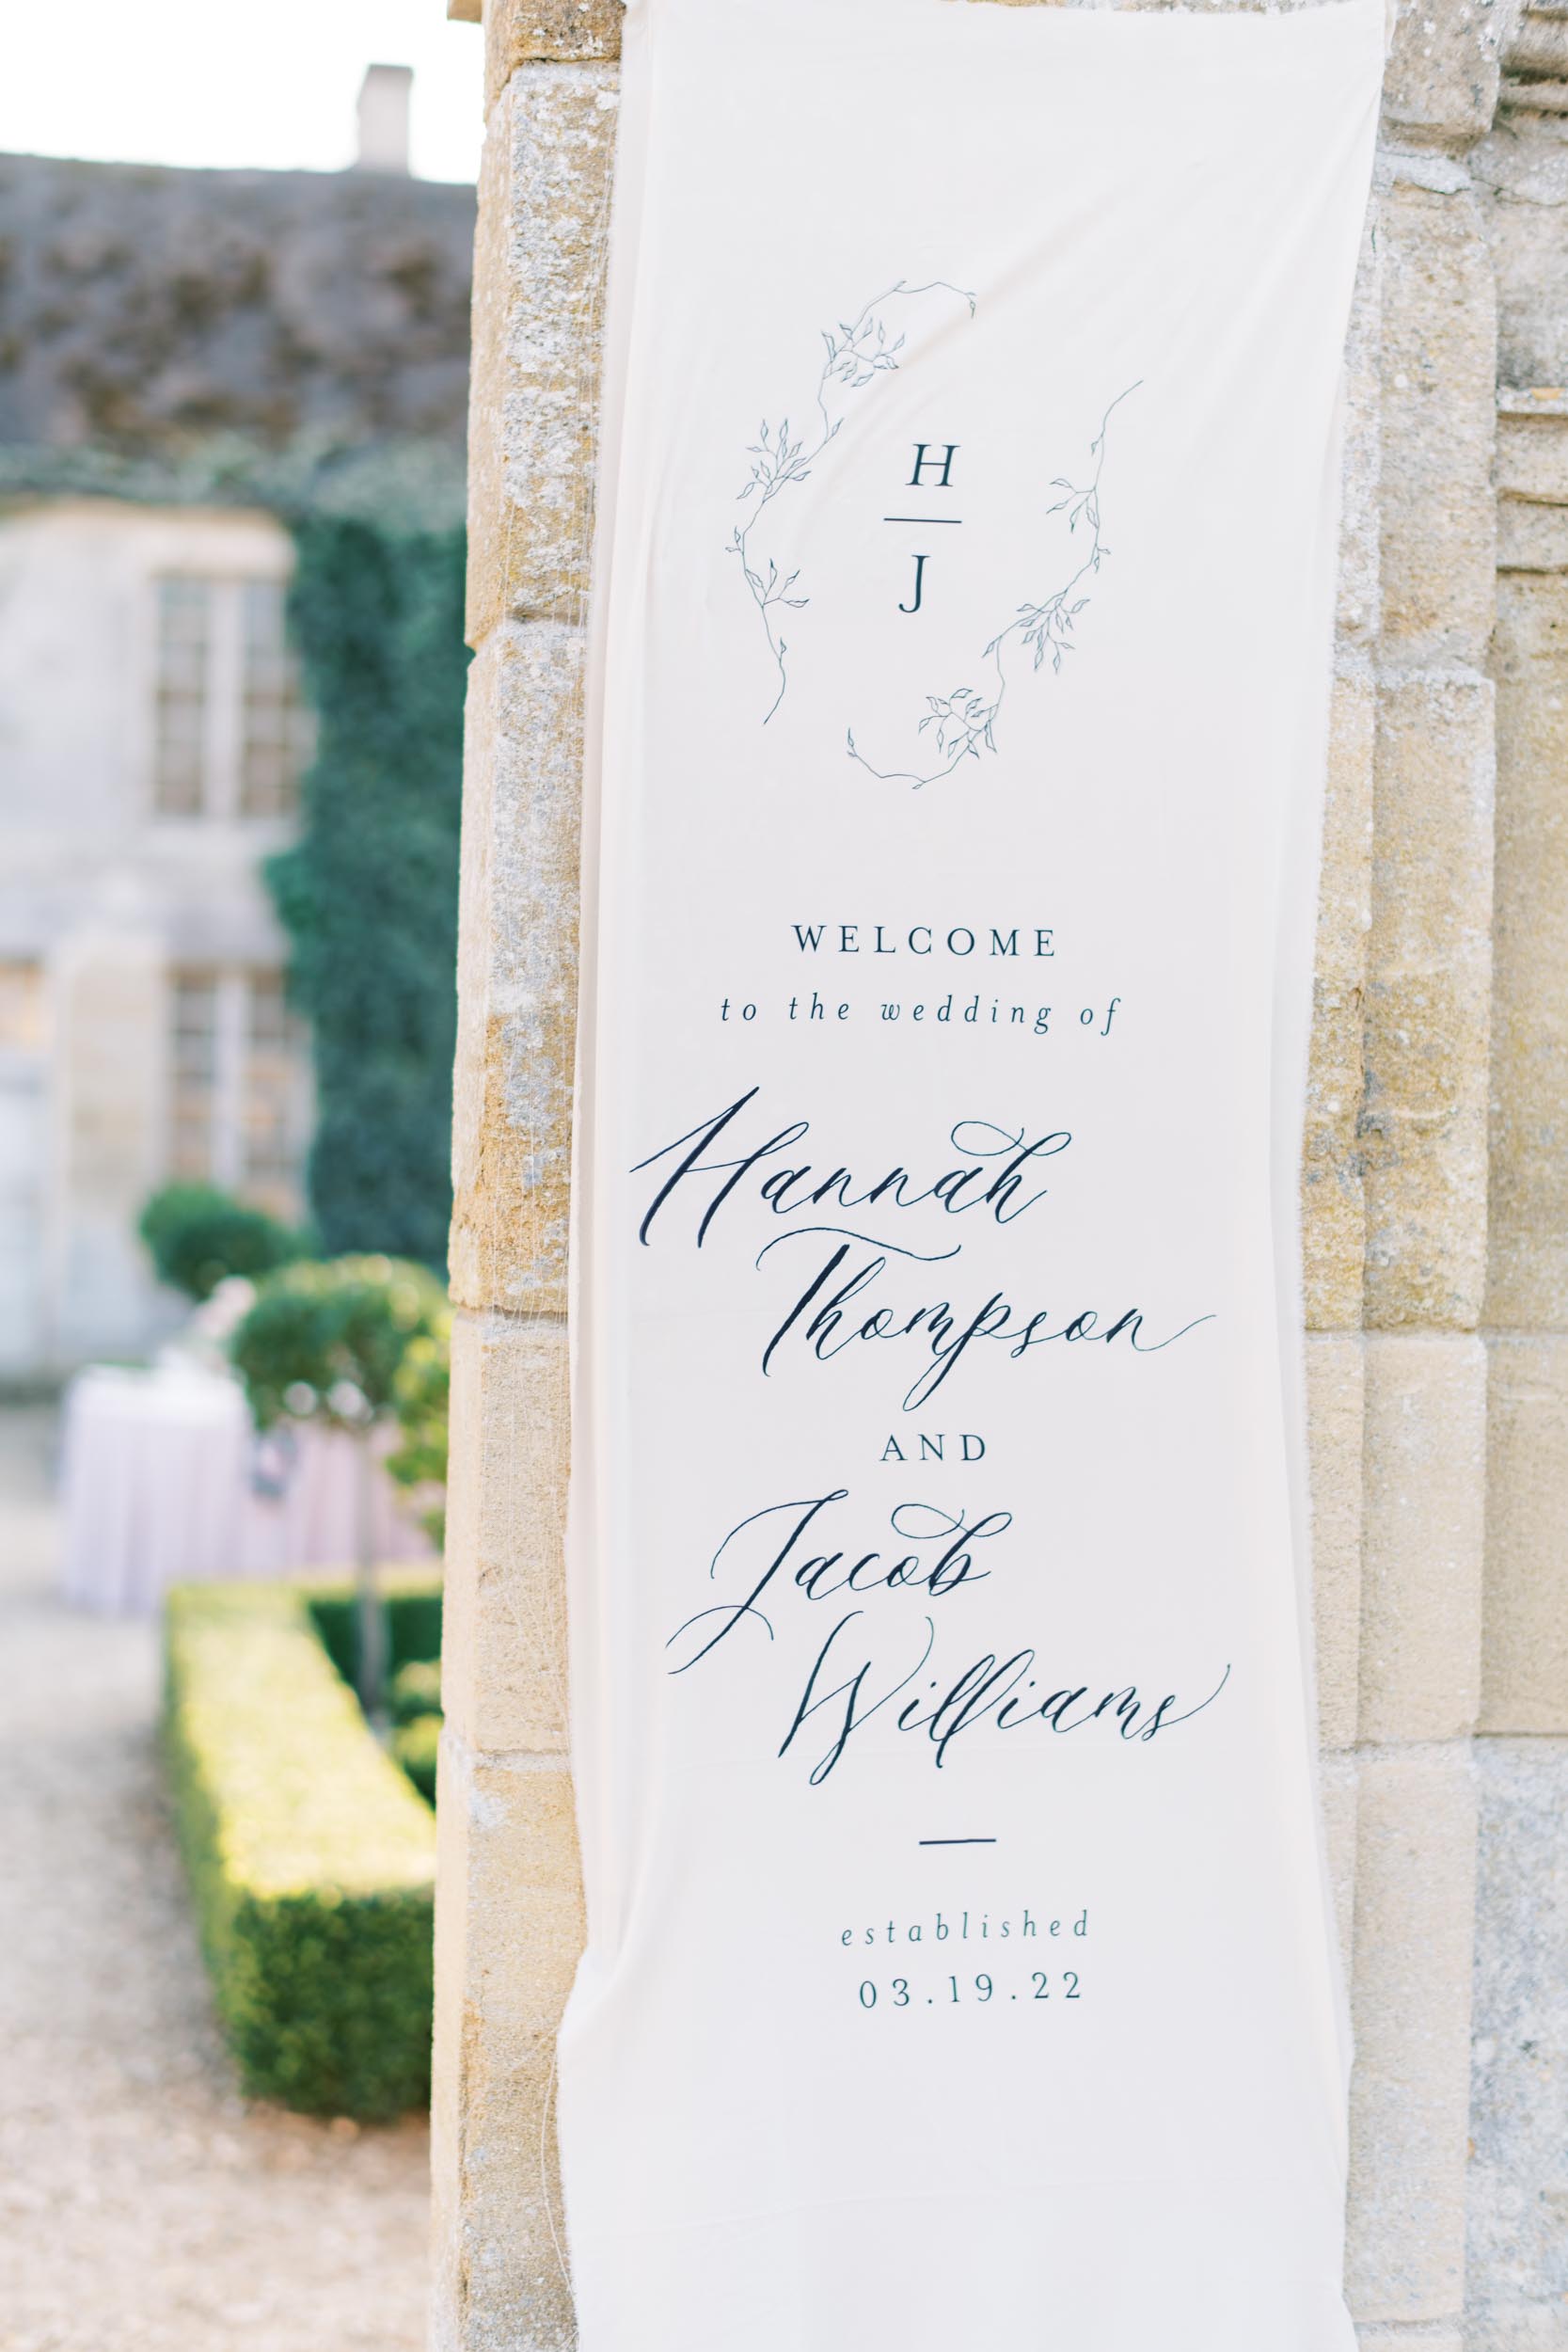 Paris chateau wedding banner